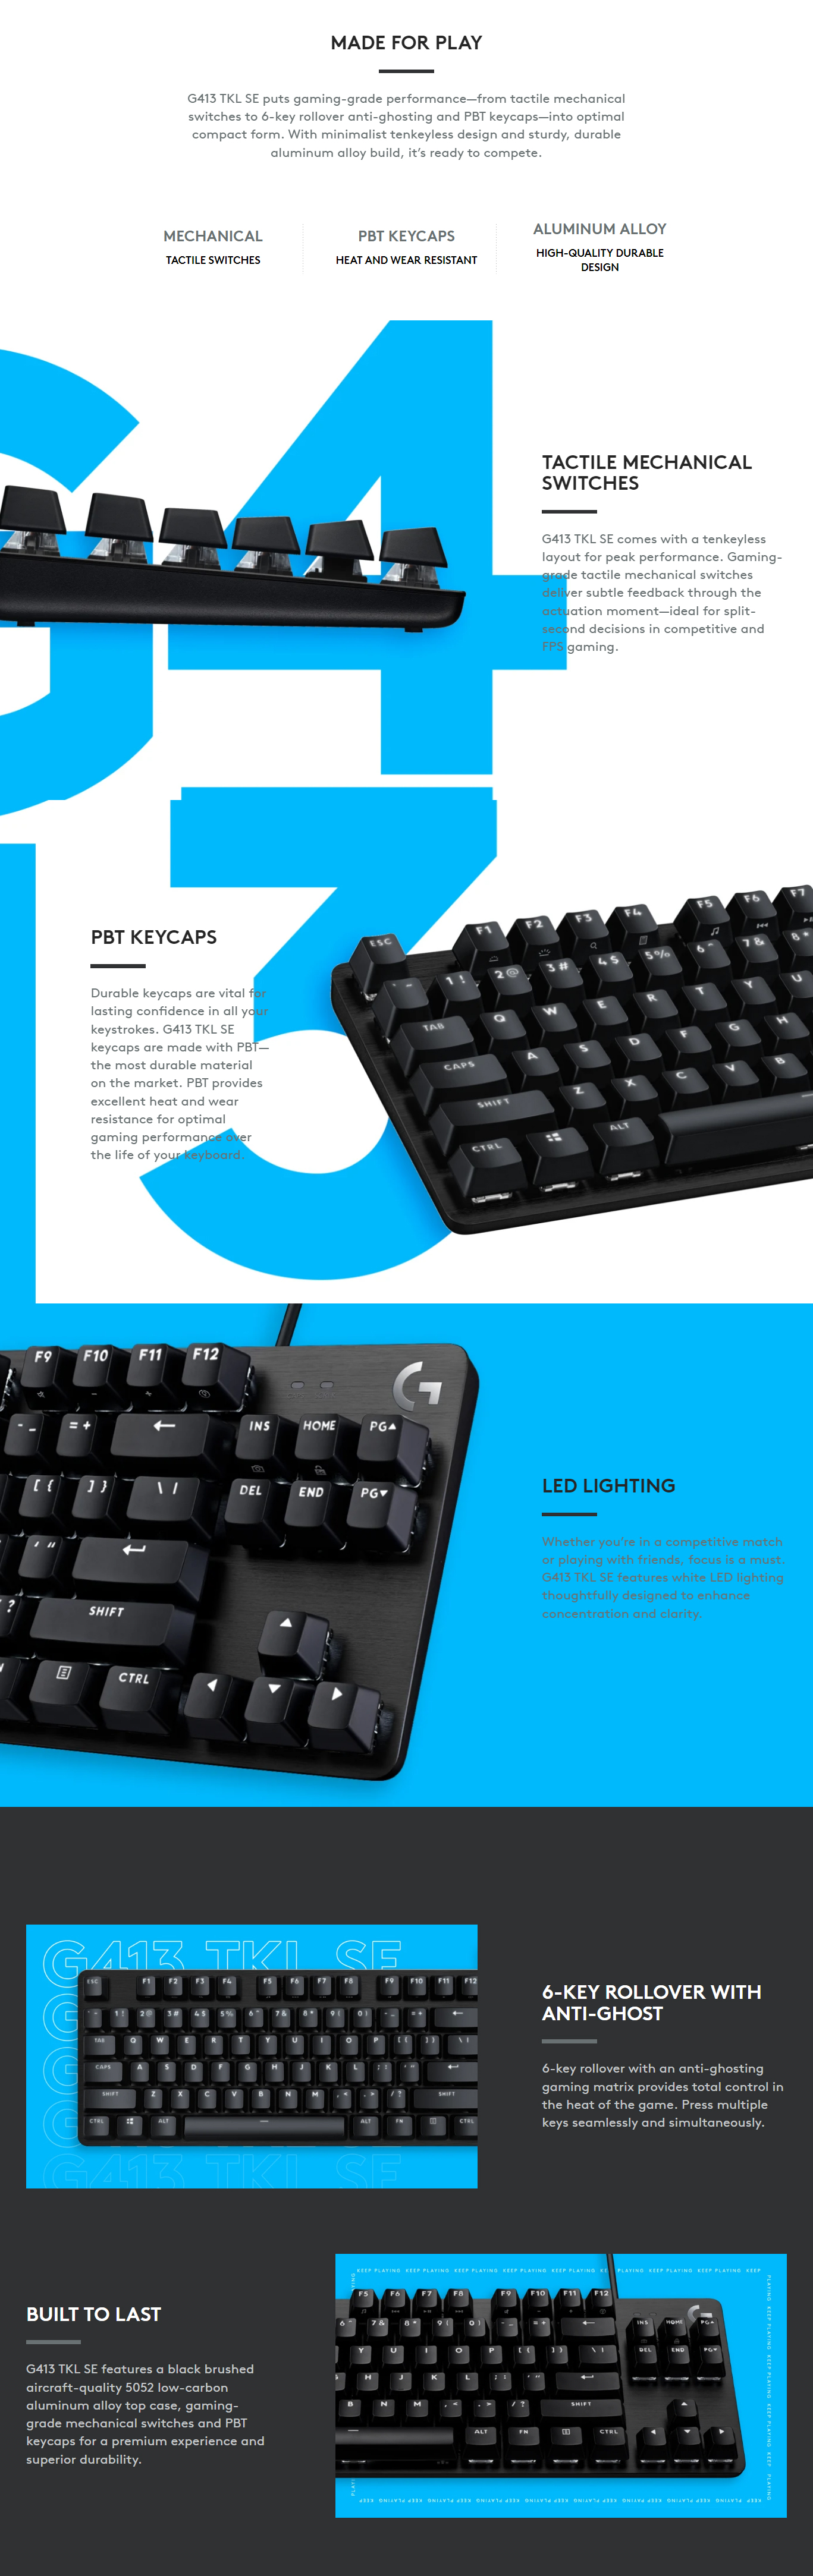 Logitech G413 TKL SE Mechanical Gaming Keyboard 